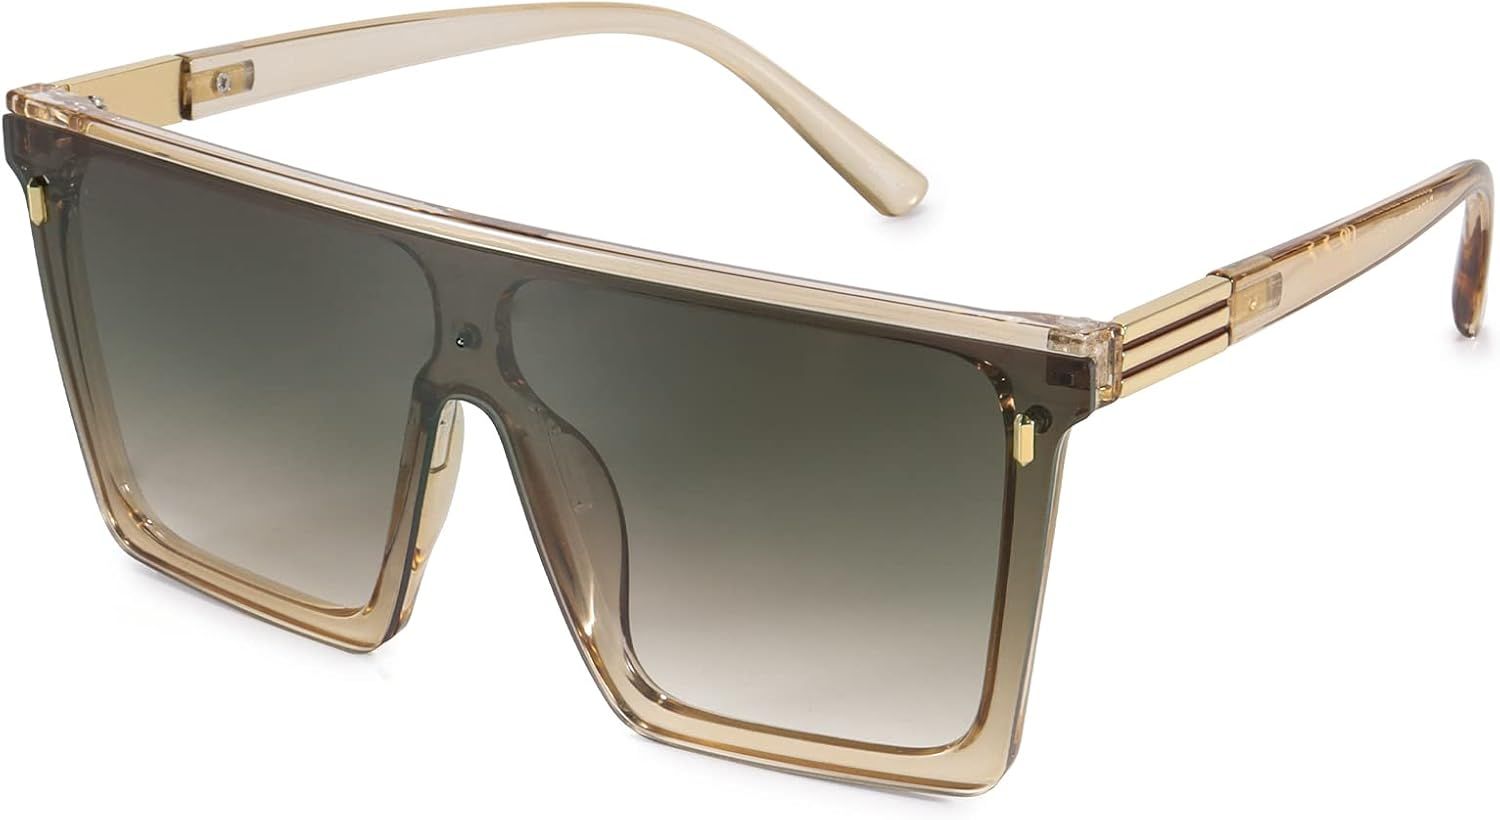 Dollger Square Oversized Sunglasses for Women Men Trendy Flat Top Big Black Shades UV400 Sunnies | Amazon (US)